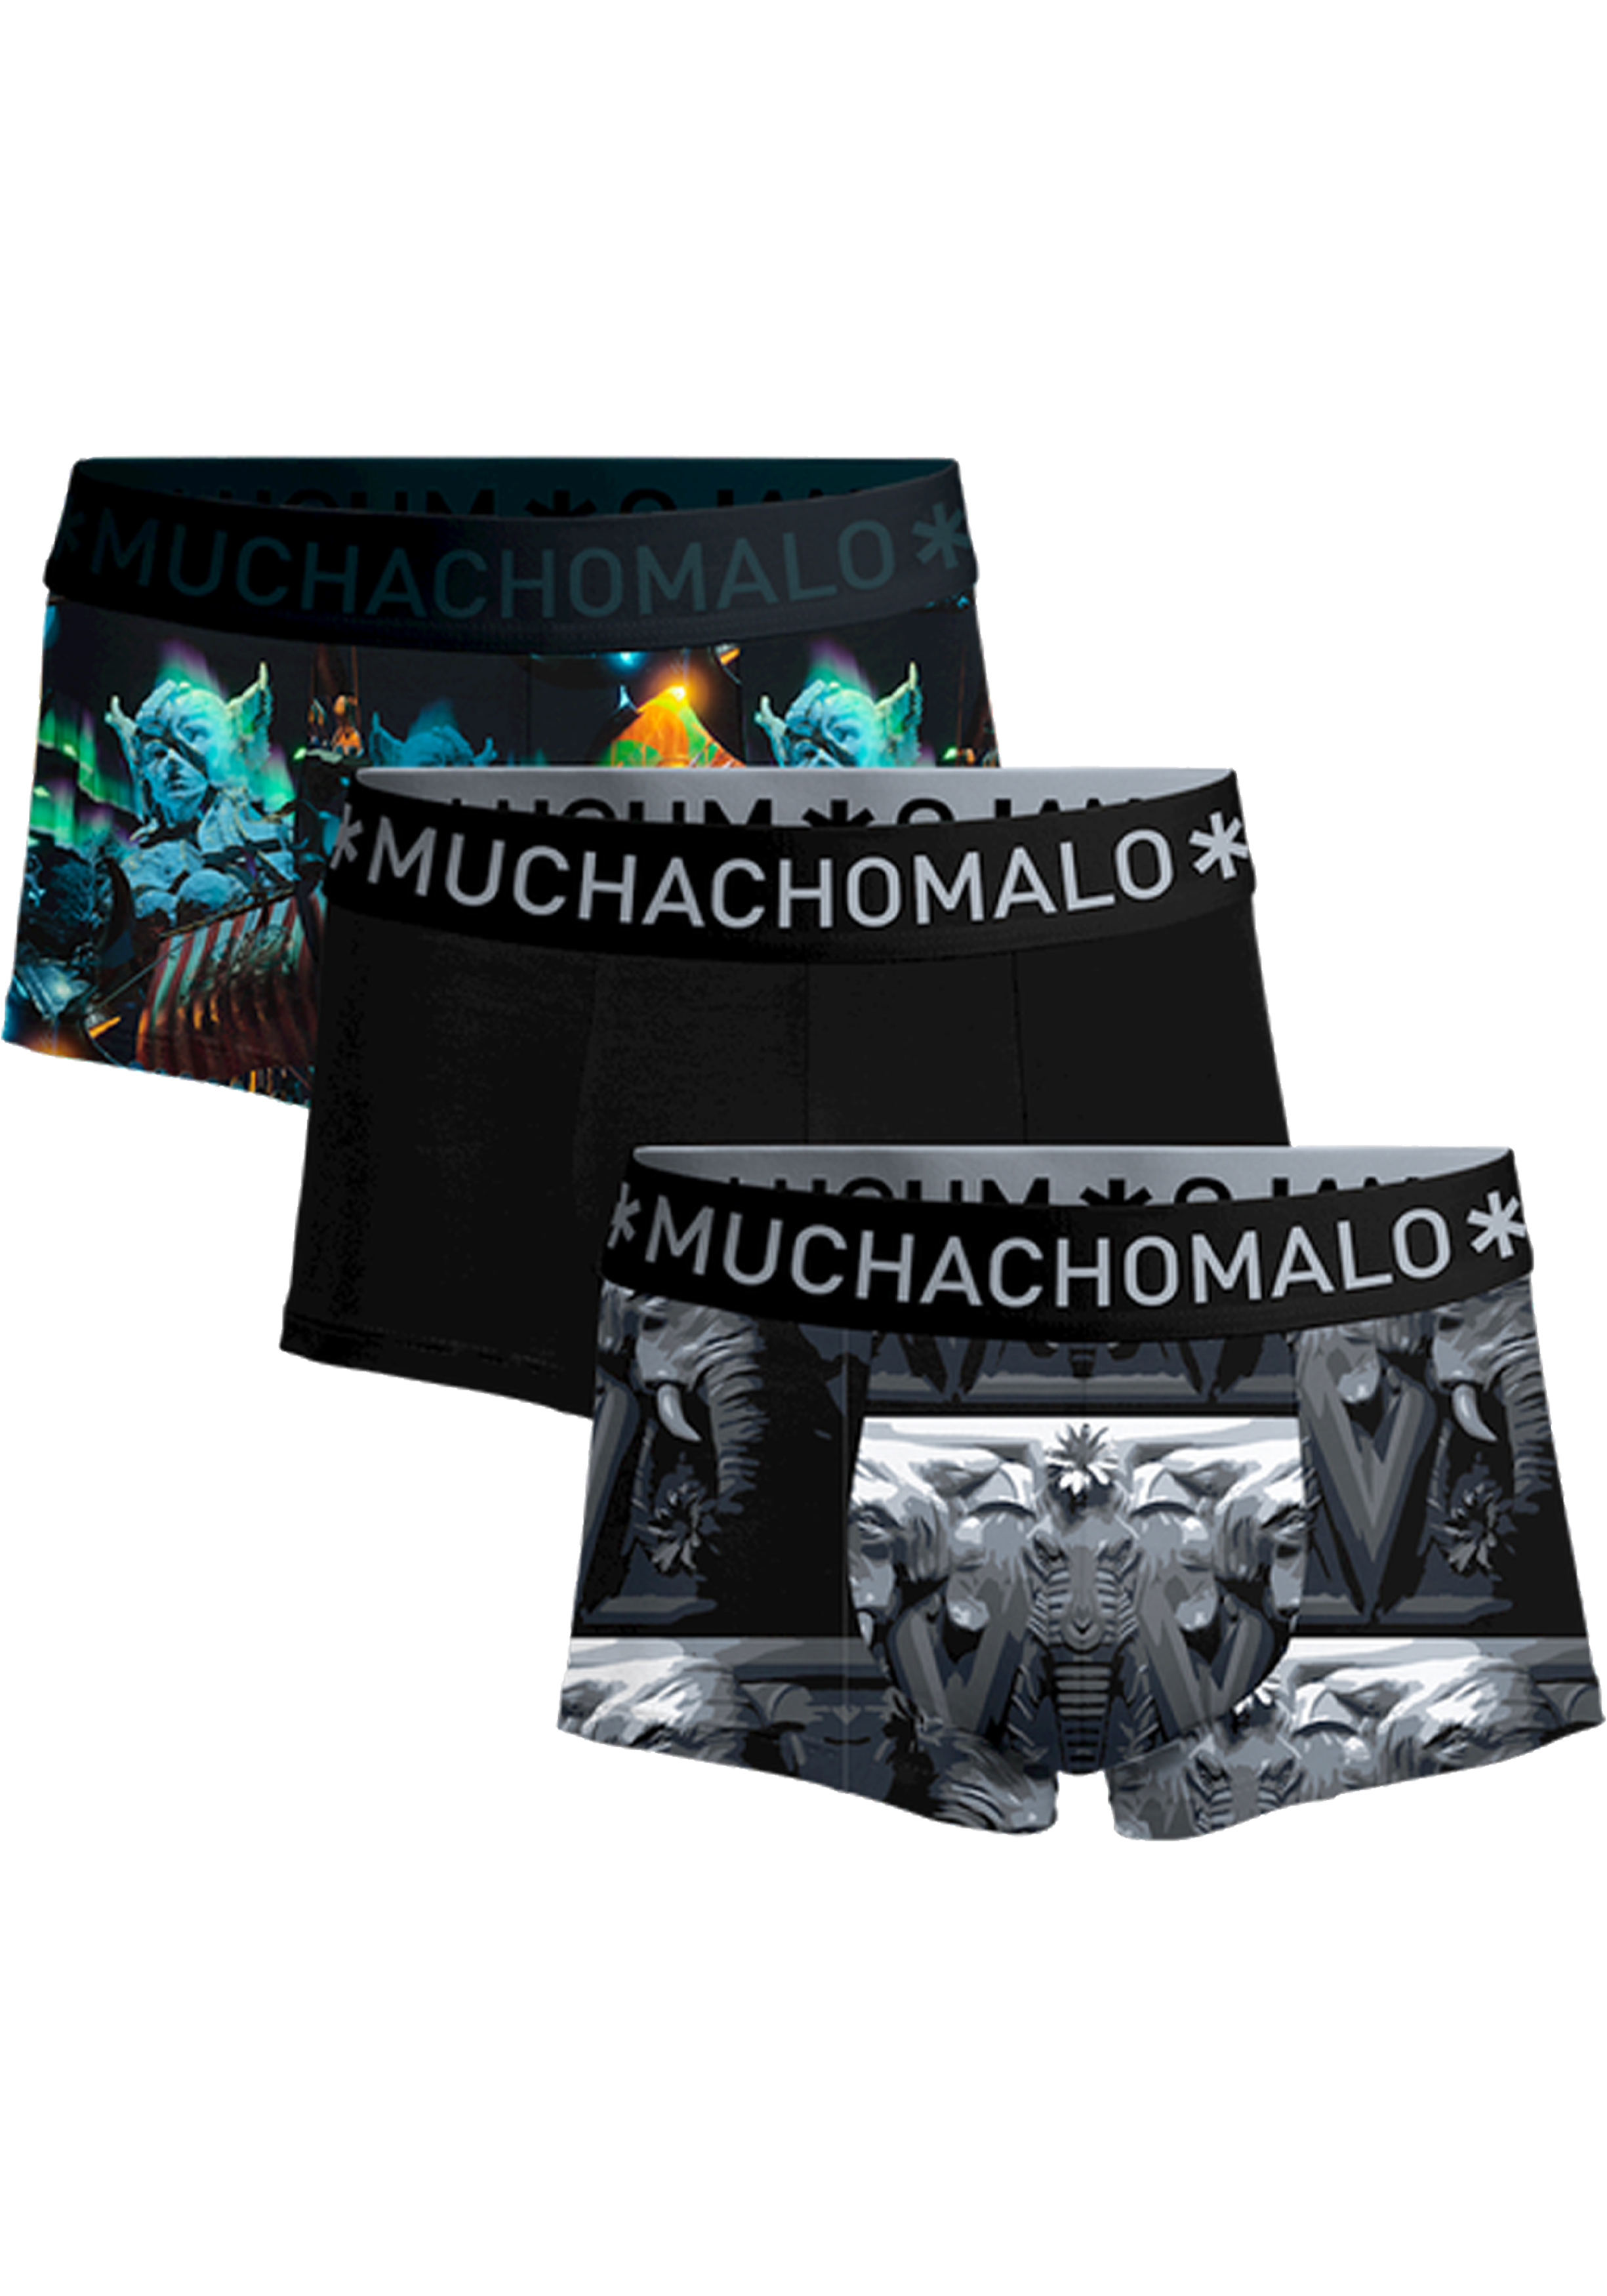 Muchachomalo boxershorts, heren boxers kort (3-pack), Elephant Norway